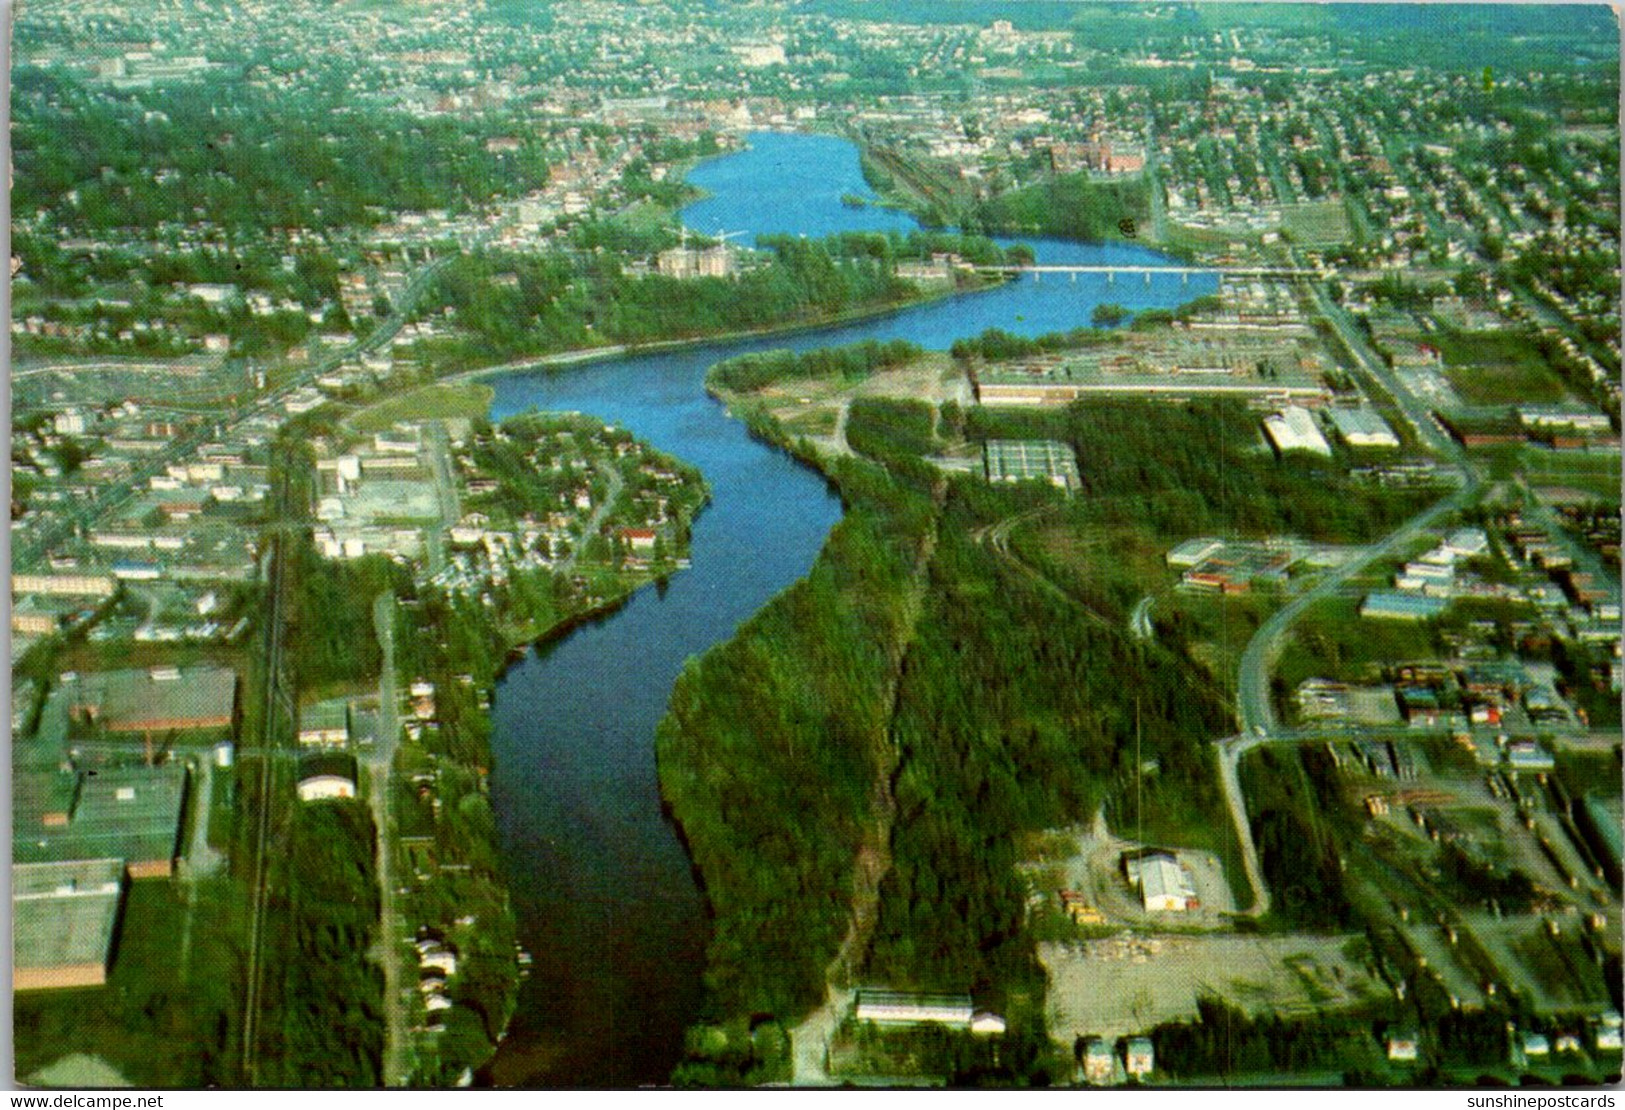 Canada Sherbrooke The Magog River Aerial View - Sherbrooke